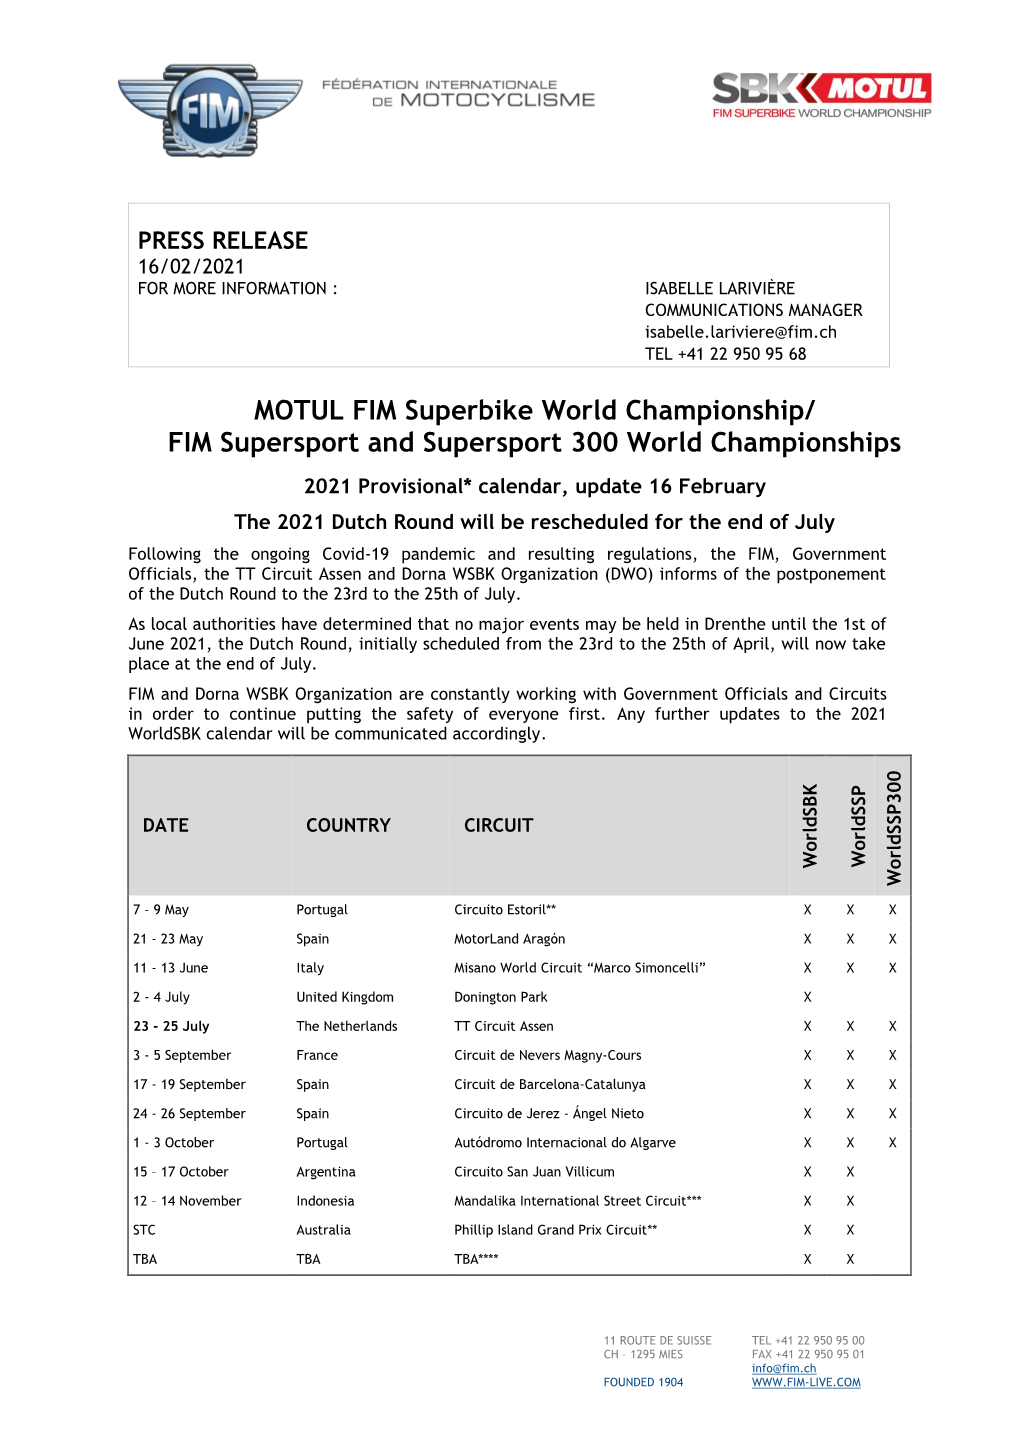 MOTUL FIM Superbike World Championship